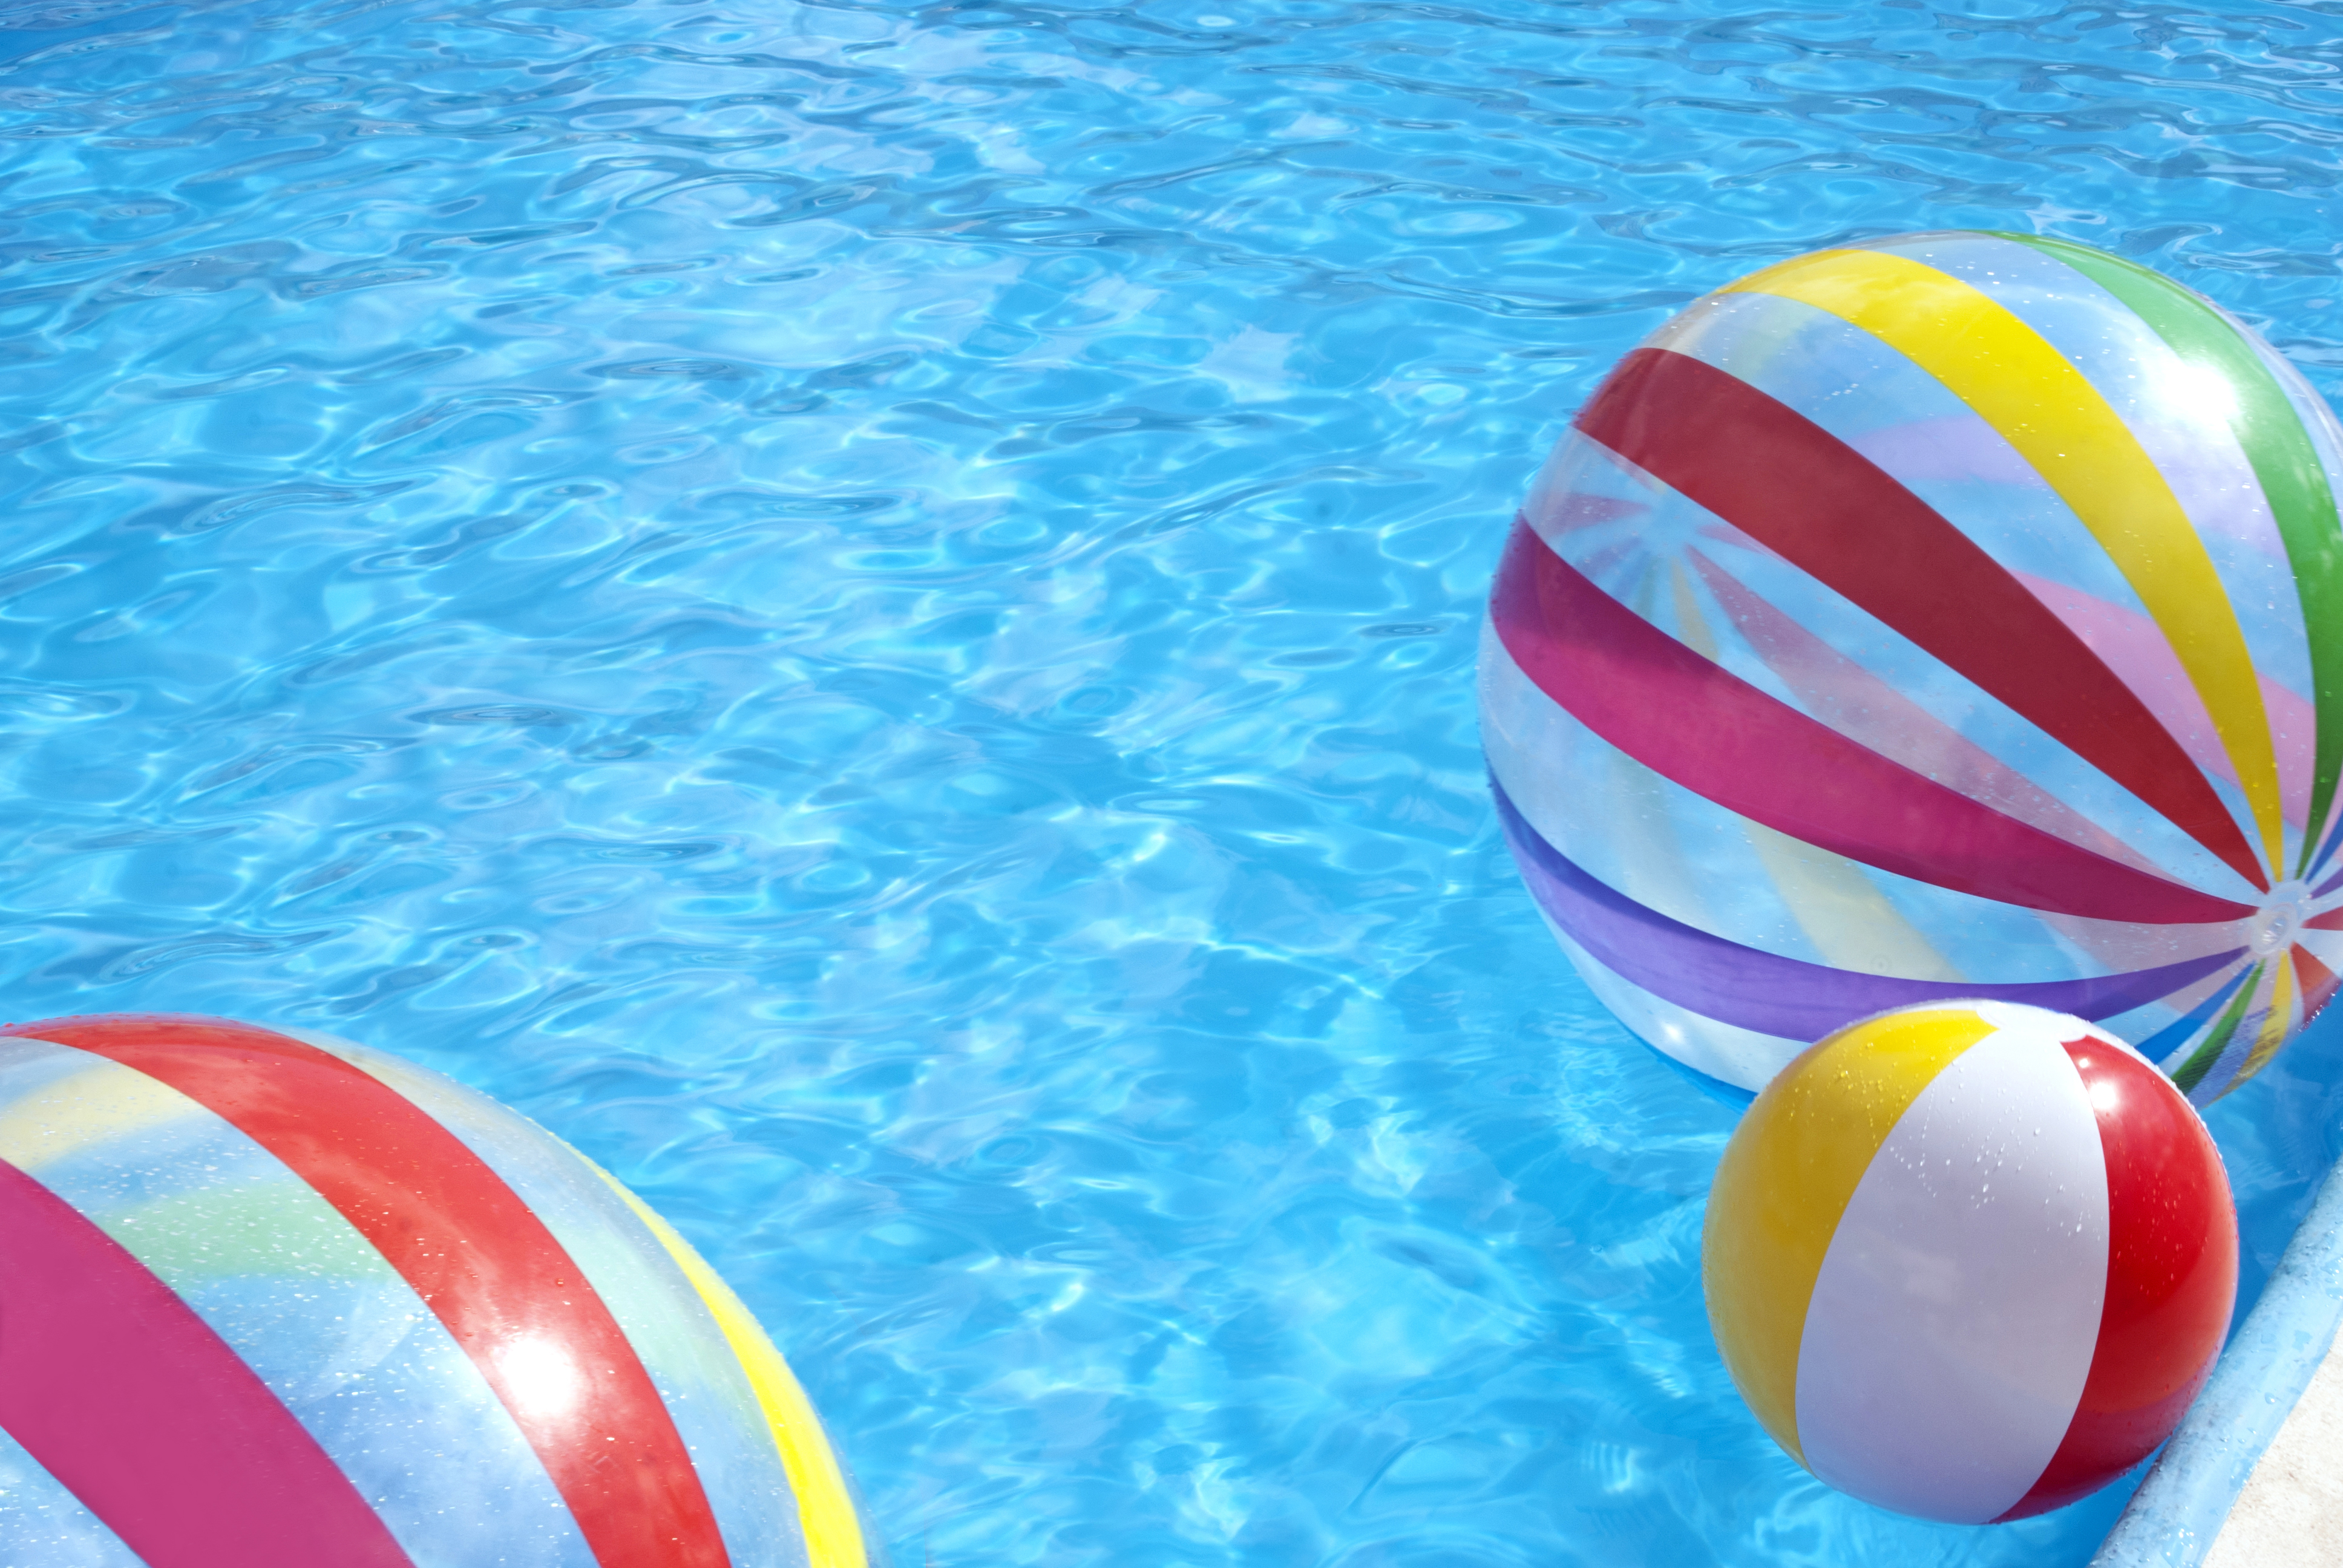 Three beach balls floating in a pool